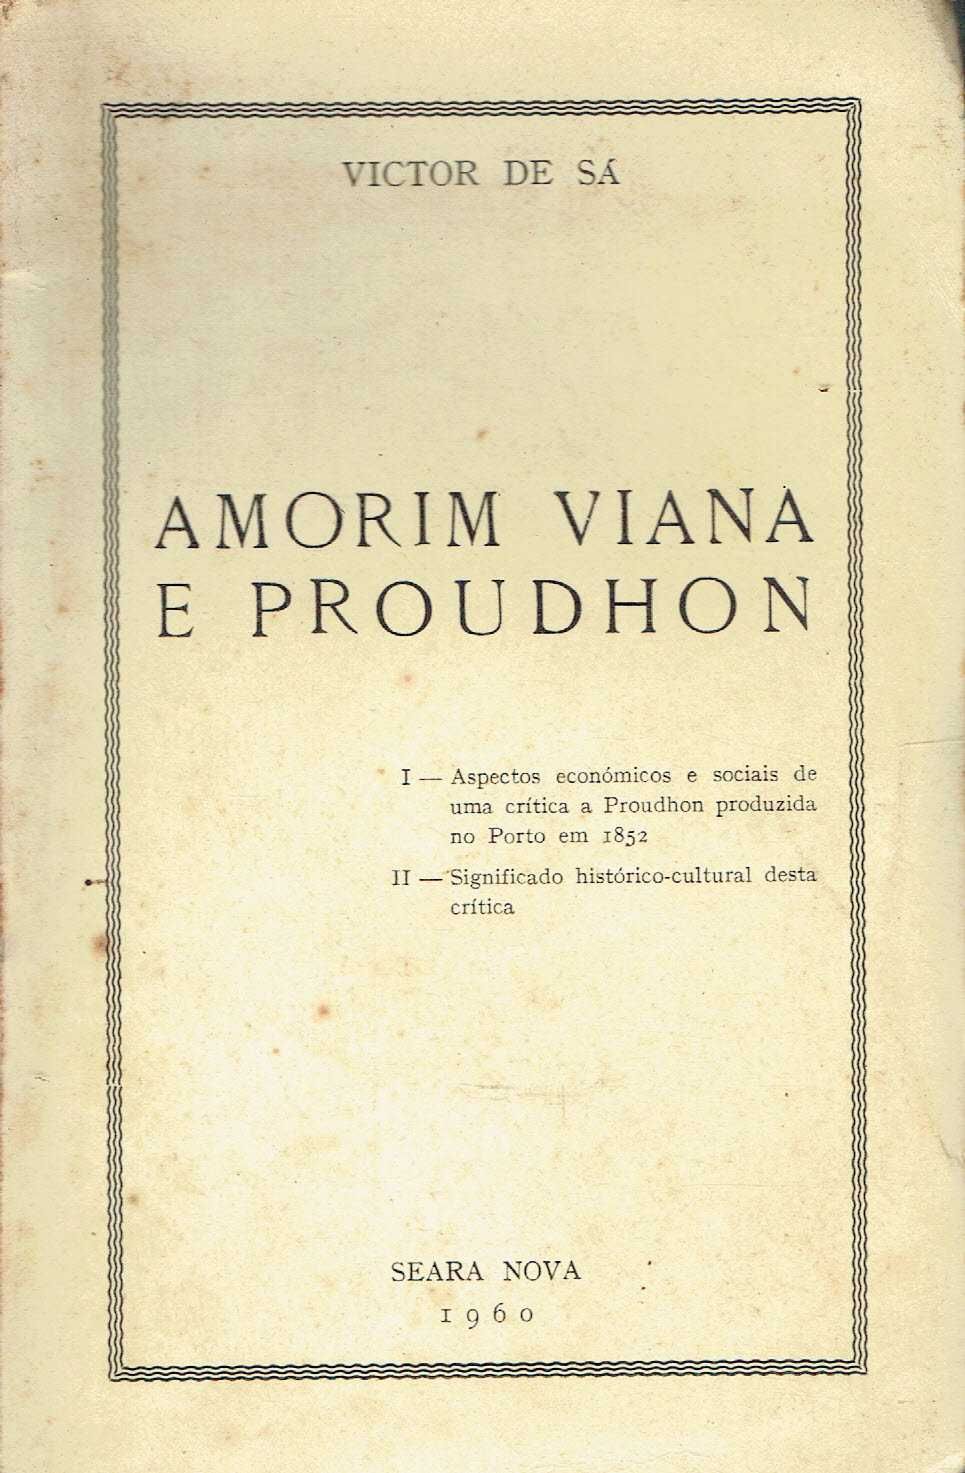 2099

Amorim Viana e Proudhon 
de Victor de Sá.